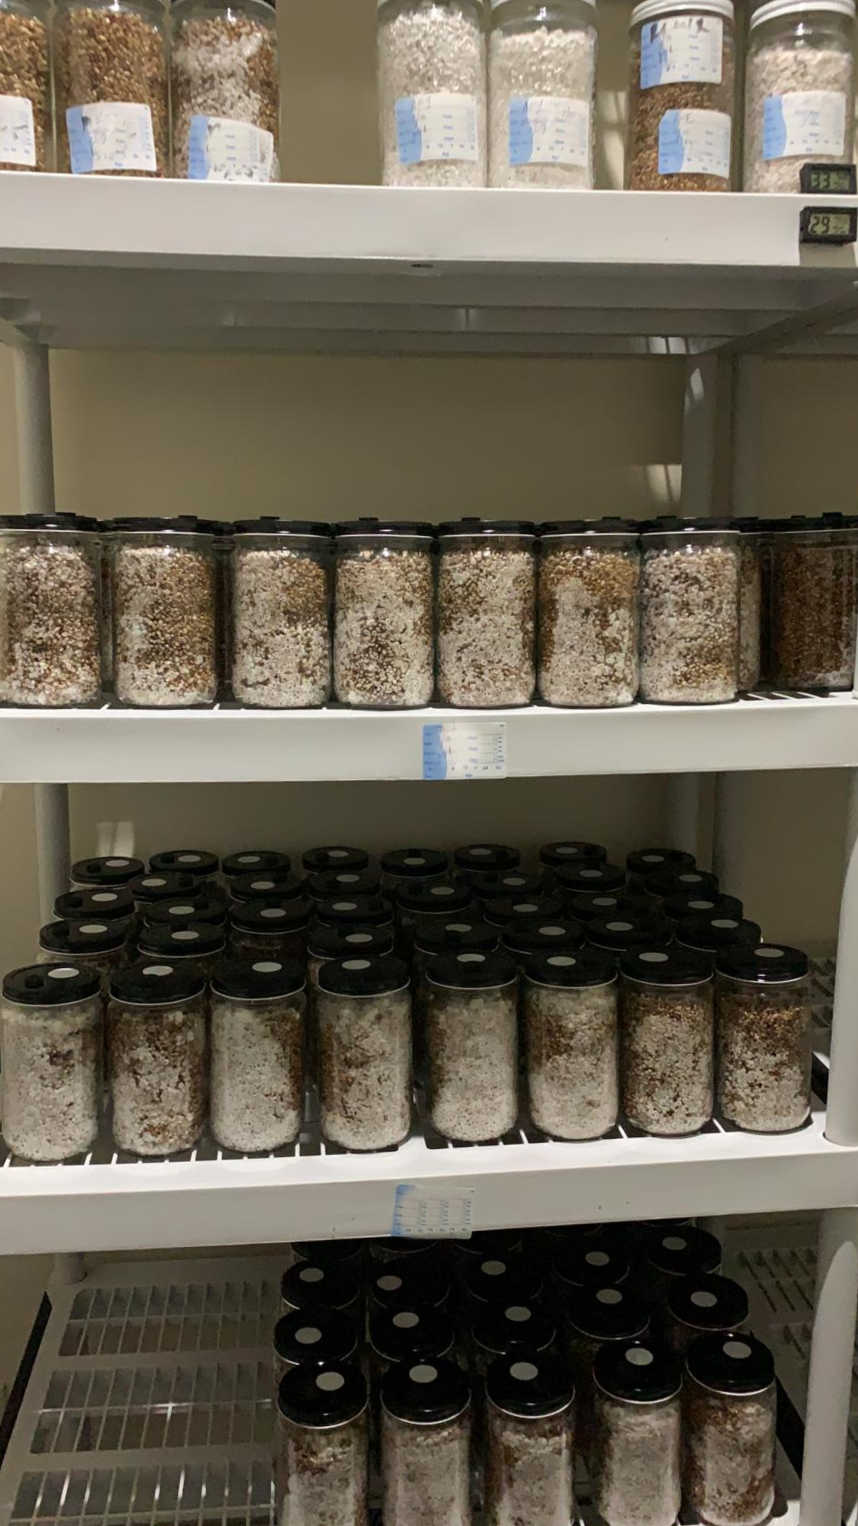 Organic Rye Berries - Mushroom Grain Spawn Substrate - Quart Jar - Org –  fungicultureco